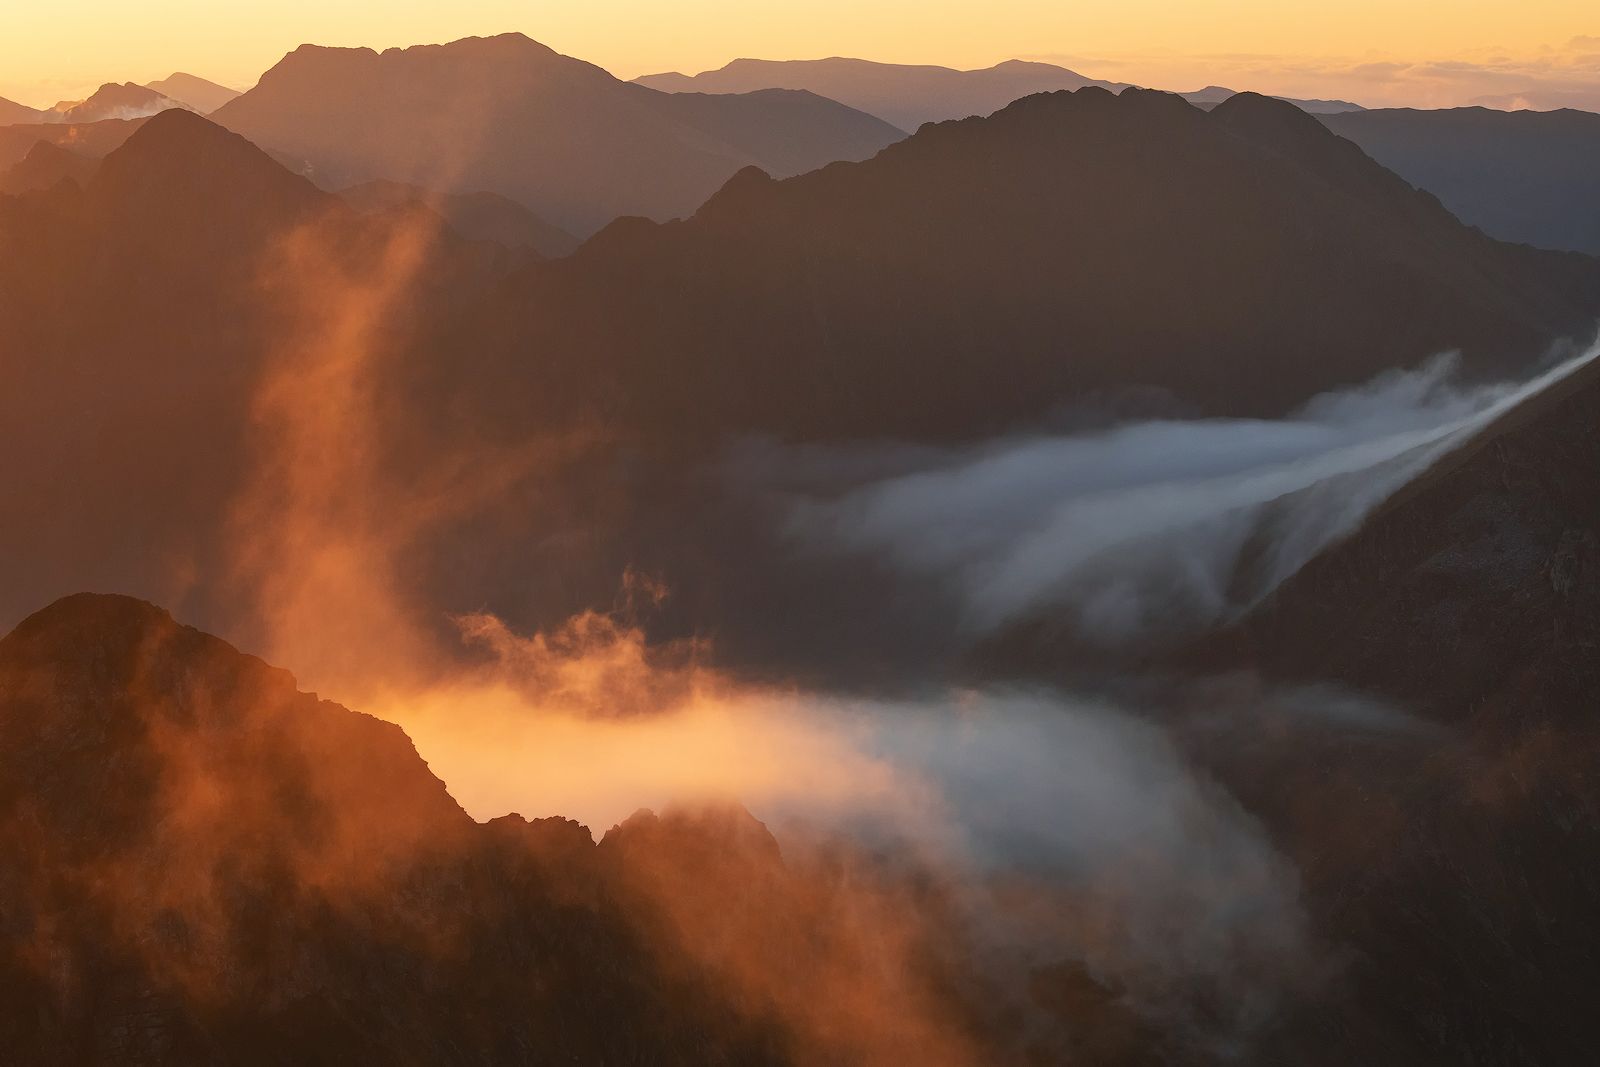 # mountains #fog #misty #morning #sunrise #romania #ridge #light #landscape #travel , Lazar Ioan Ovidiu